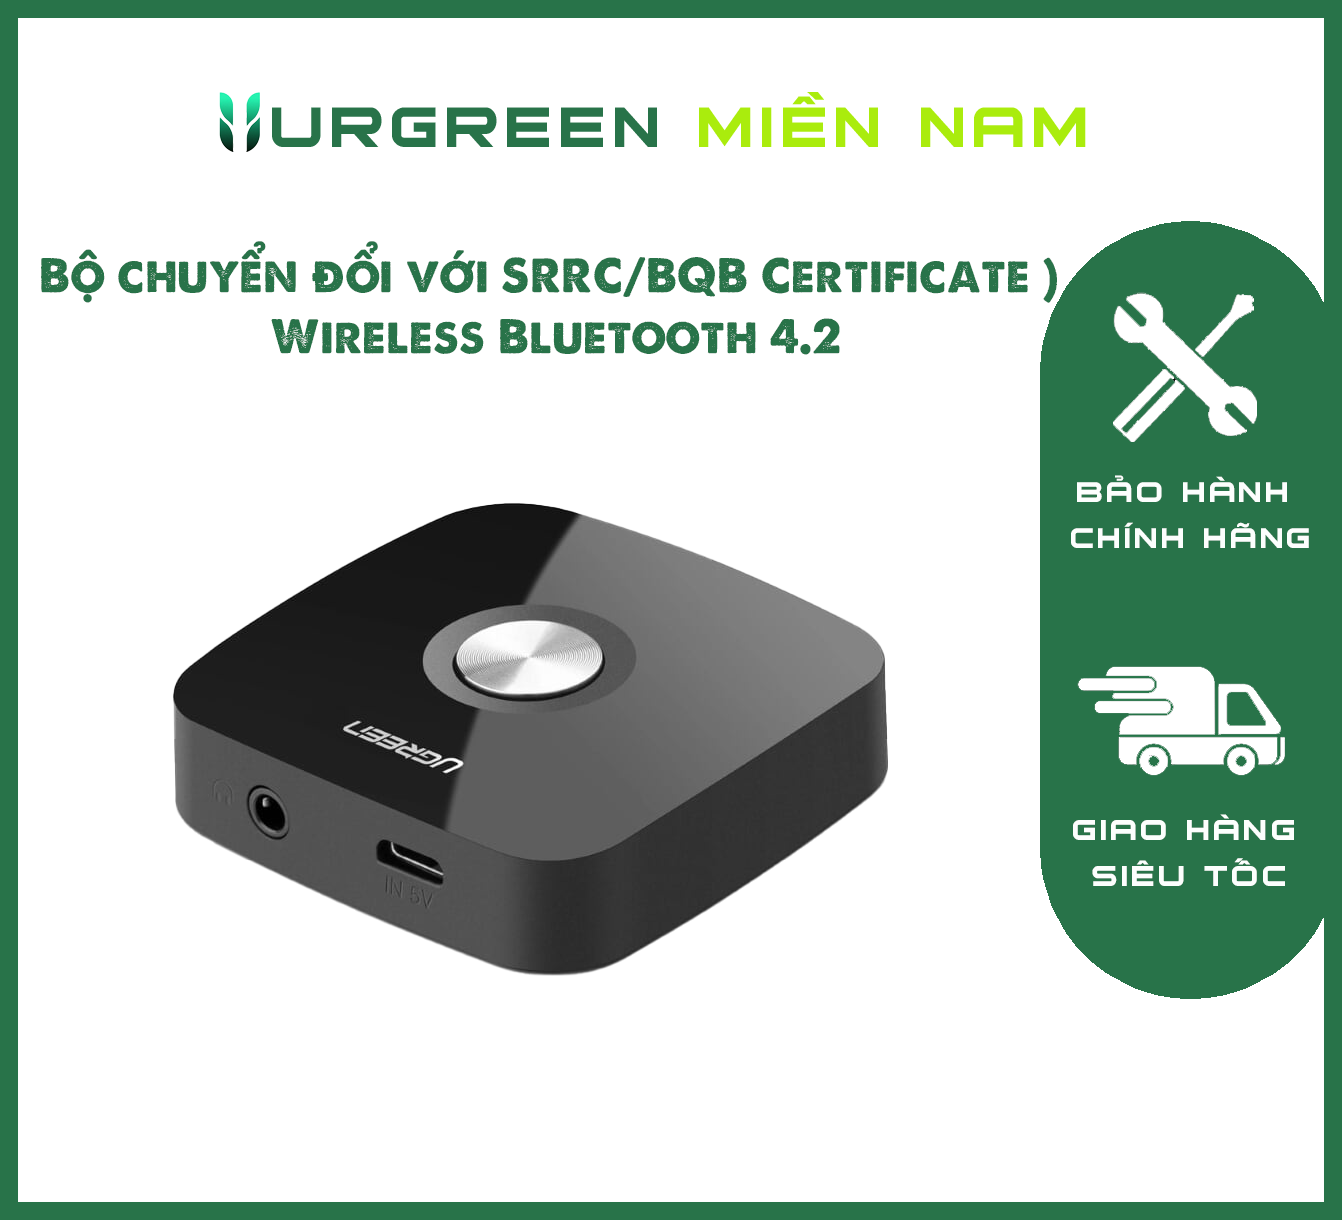 Bộ chuyển đổi với SRRC/BQB Certificate ) Wireless Bluetooth 4.2 APTX Receiver Audio model CM105 đen Ugreen 40758